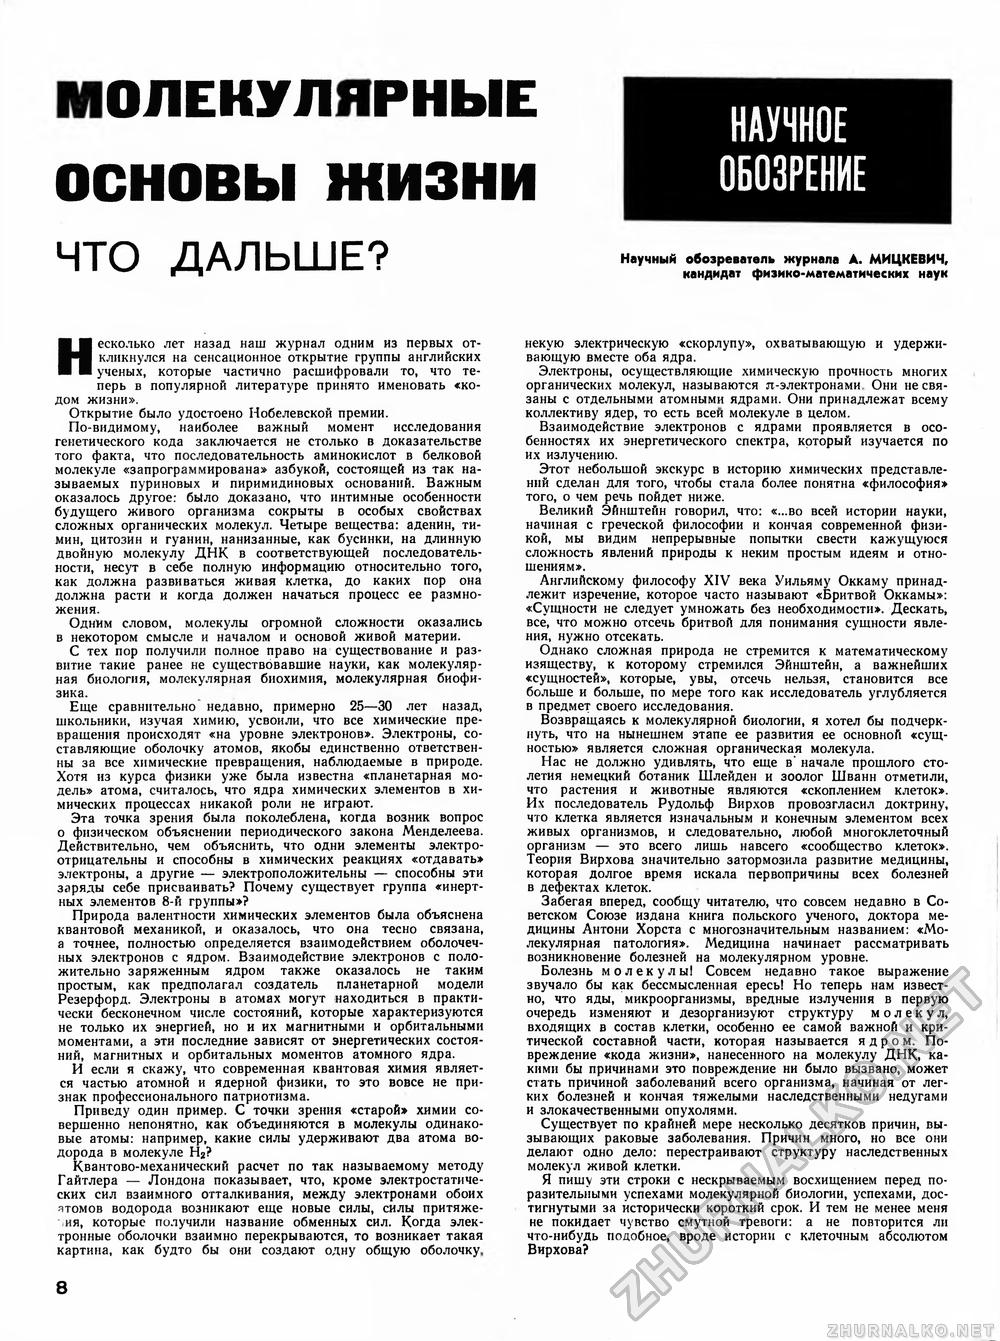 Техника - молодёжи 1968-04, страница 12